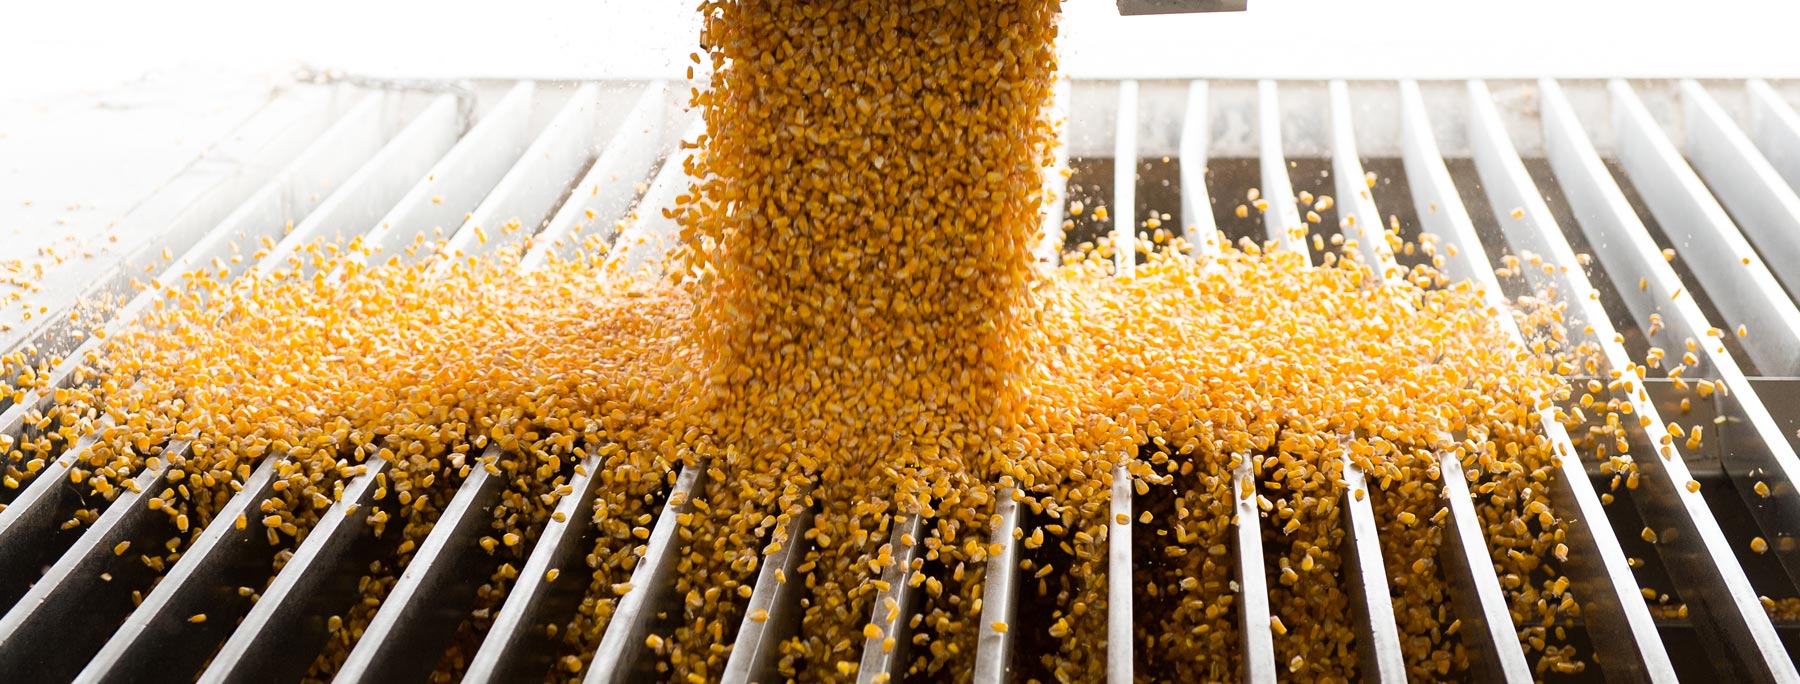 Corn - U.S. GRAINS COUNCIL